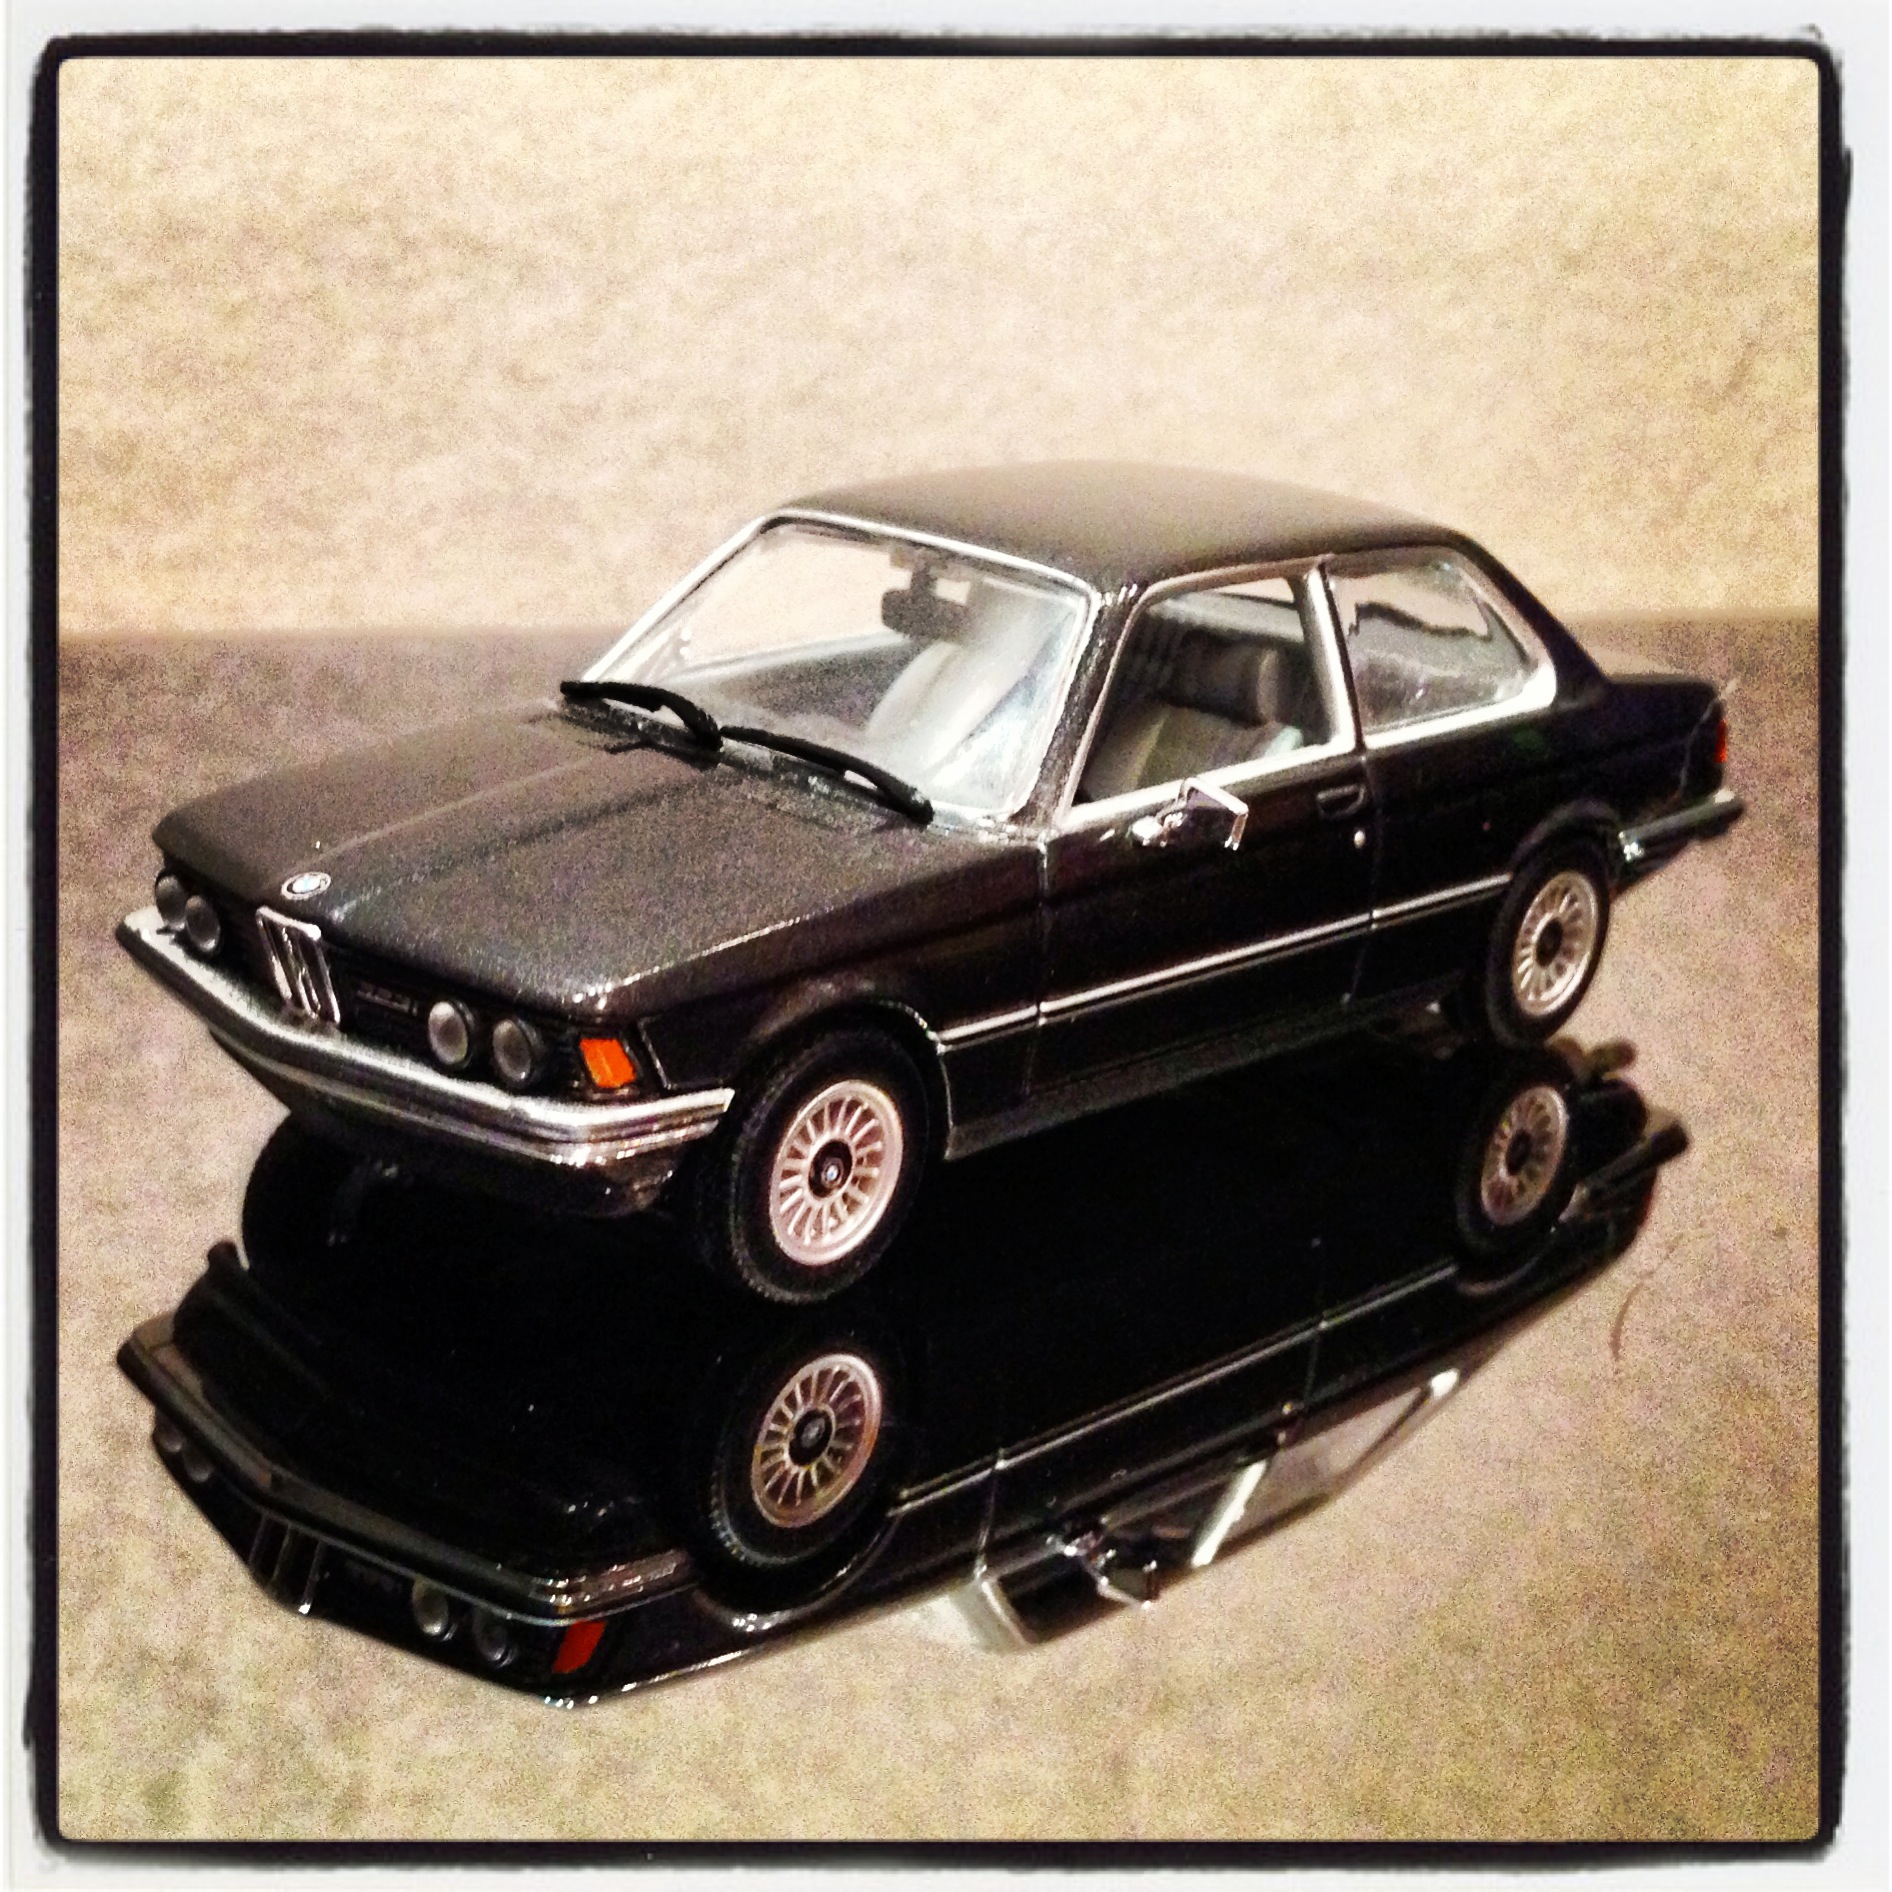 BMW 323i (E21) 1975-83, black, le 1 of 1,728pcs. (minichamps)